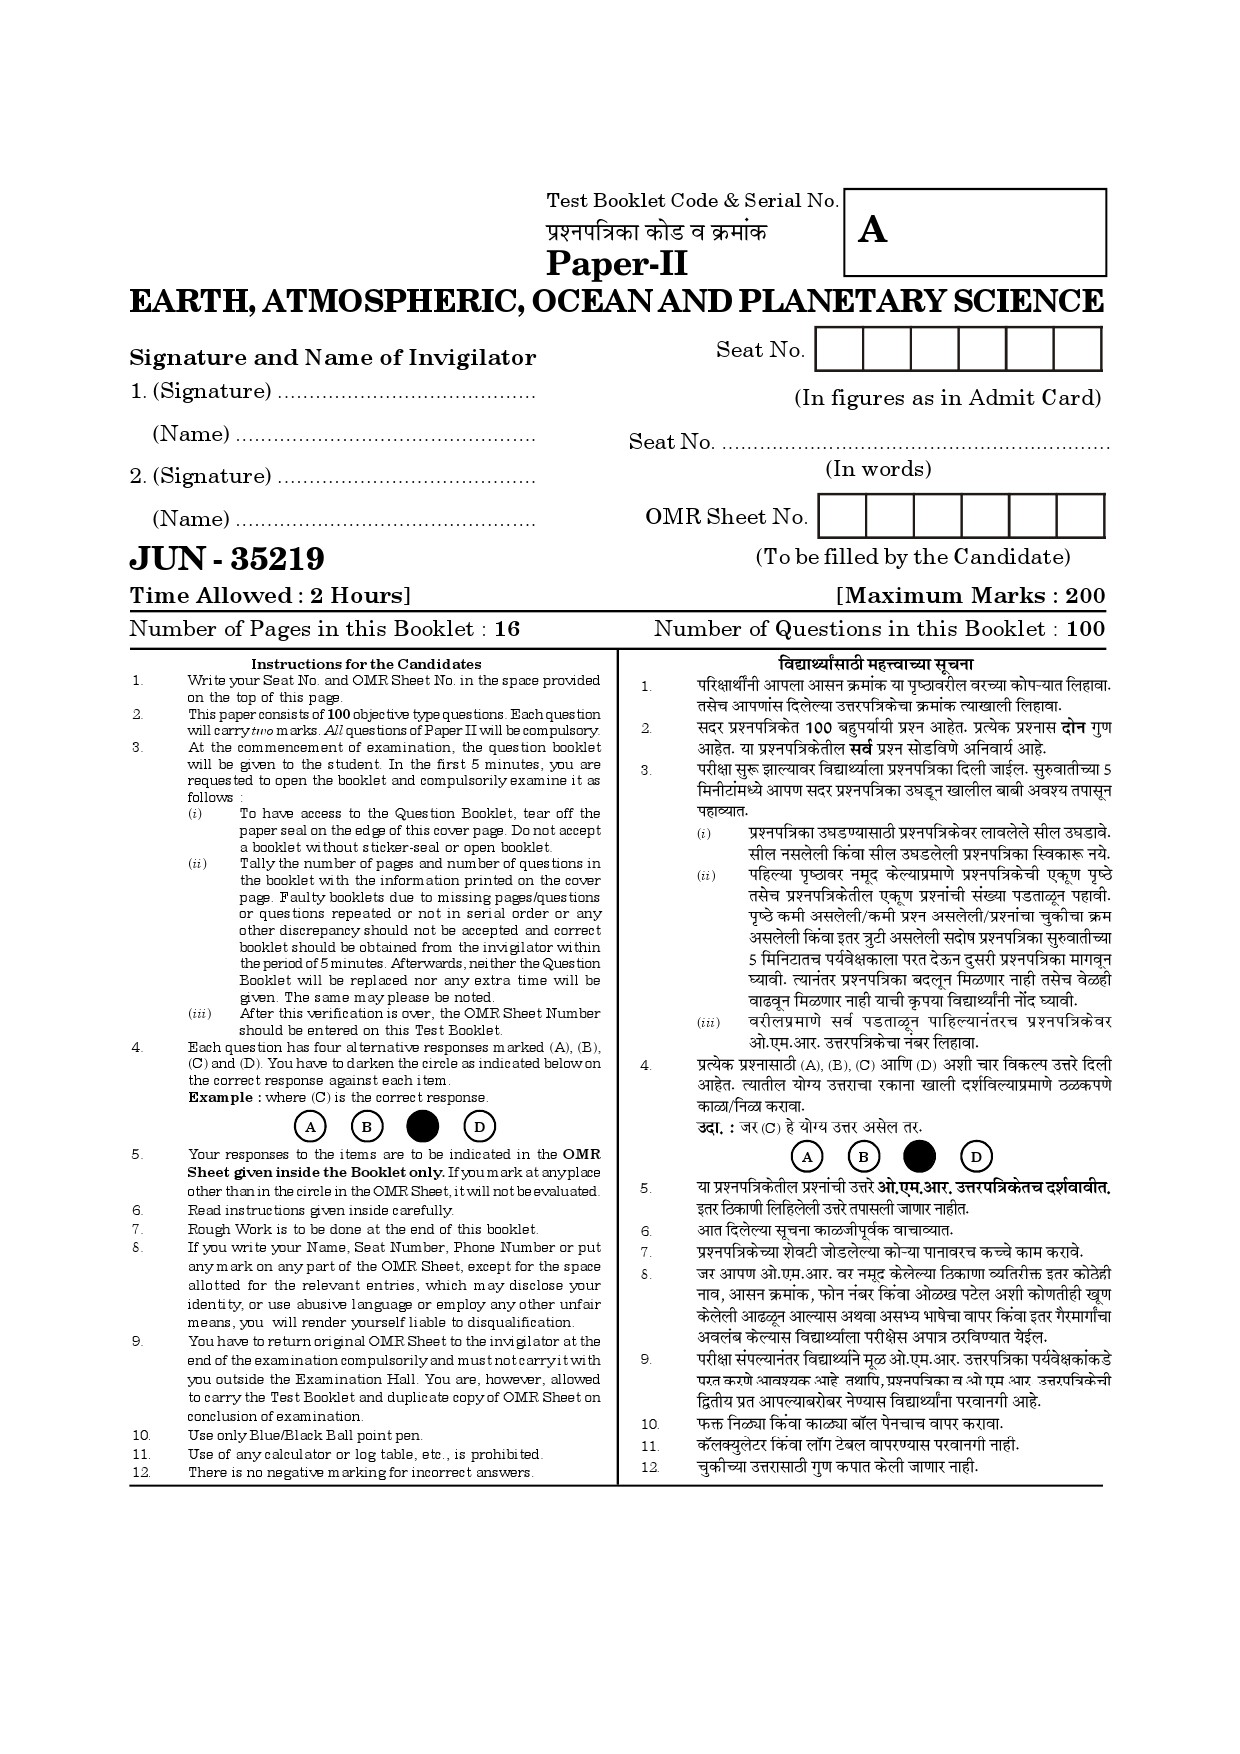 Maharashtra SET Earth Atmospheric Ocean Planetary Science Question Paper II June 2019 1